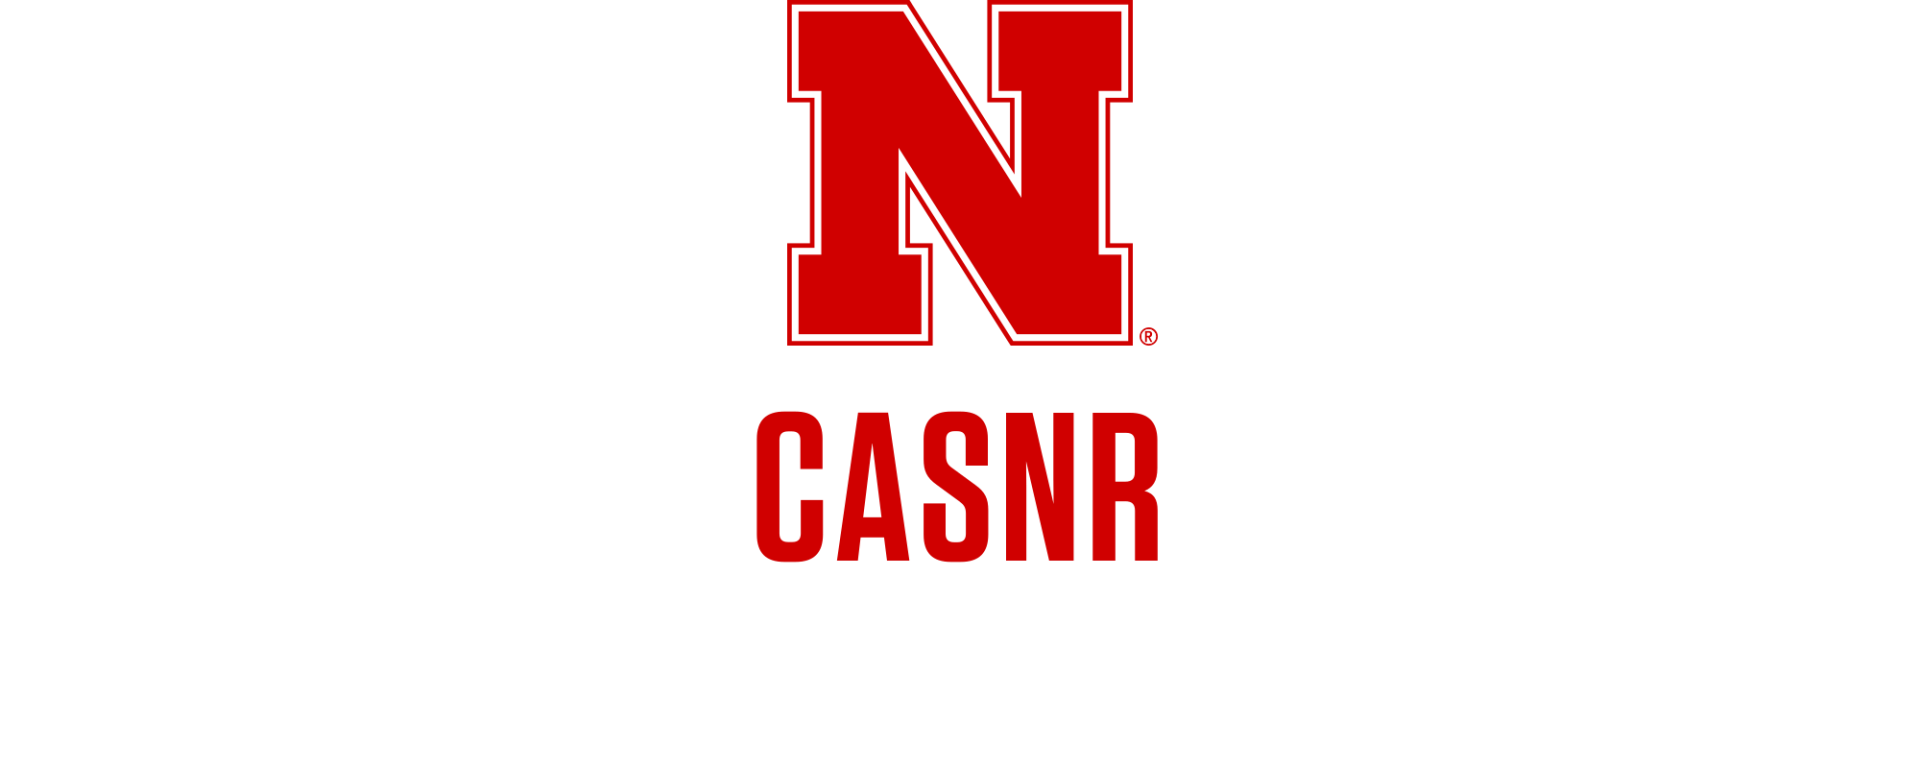 CASNR logo lockup